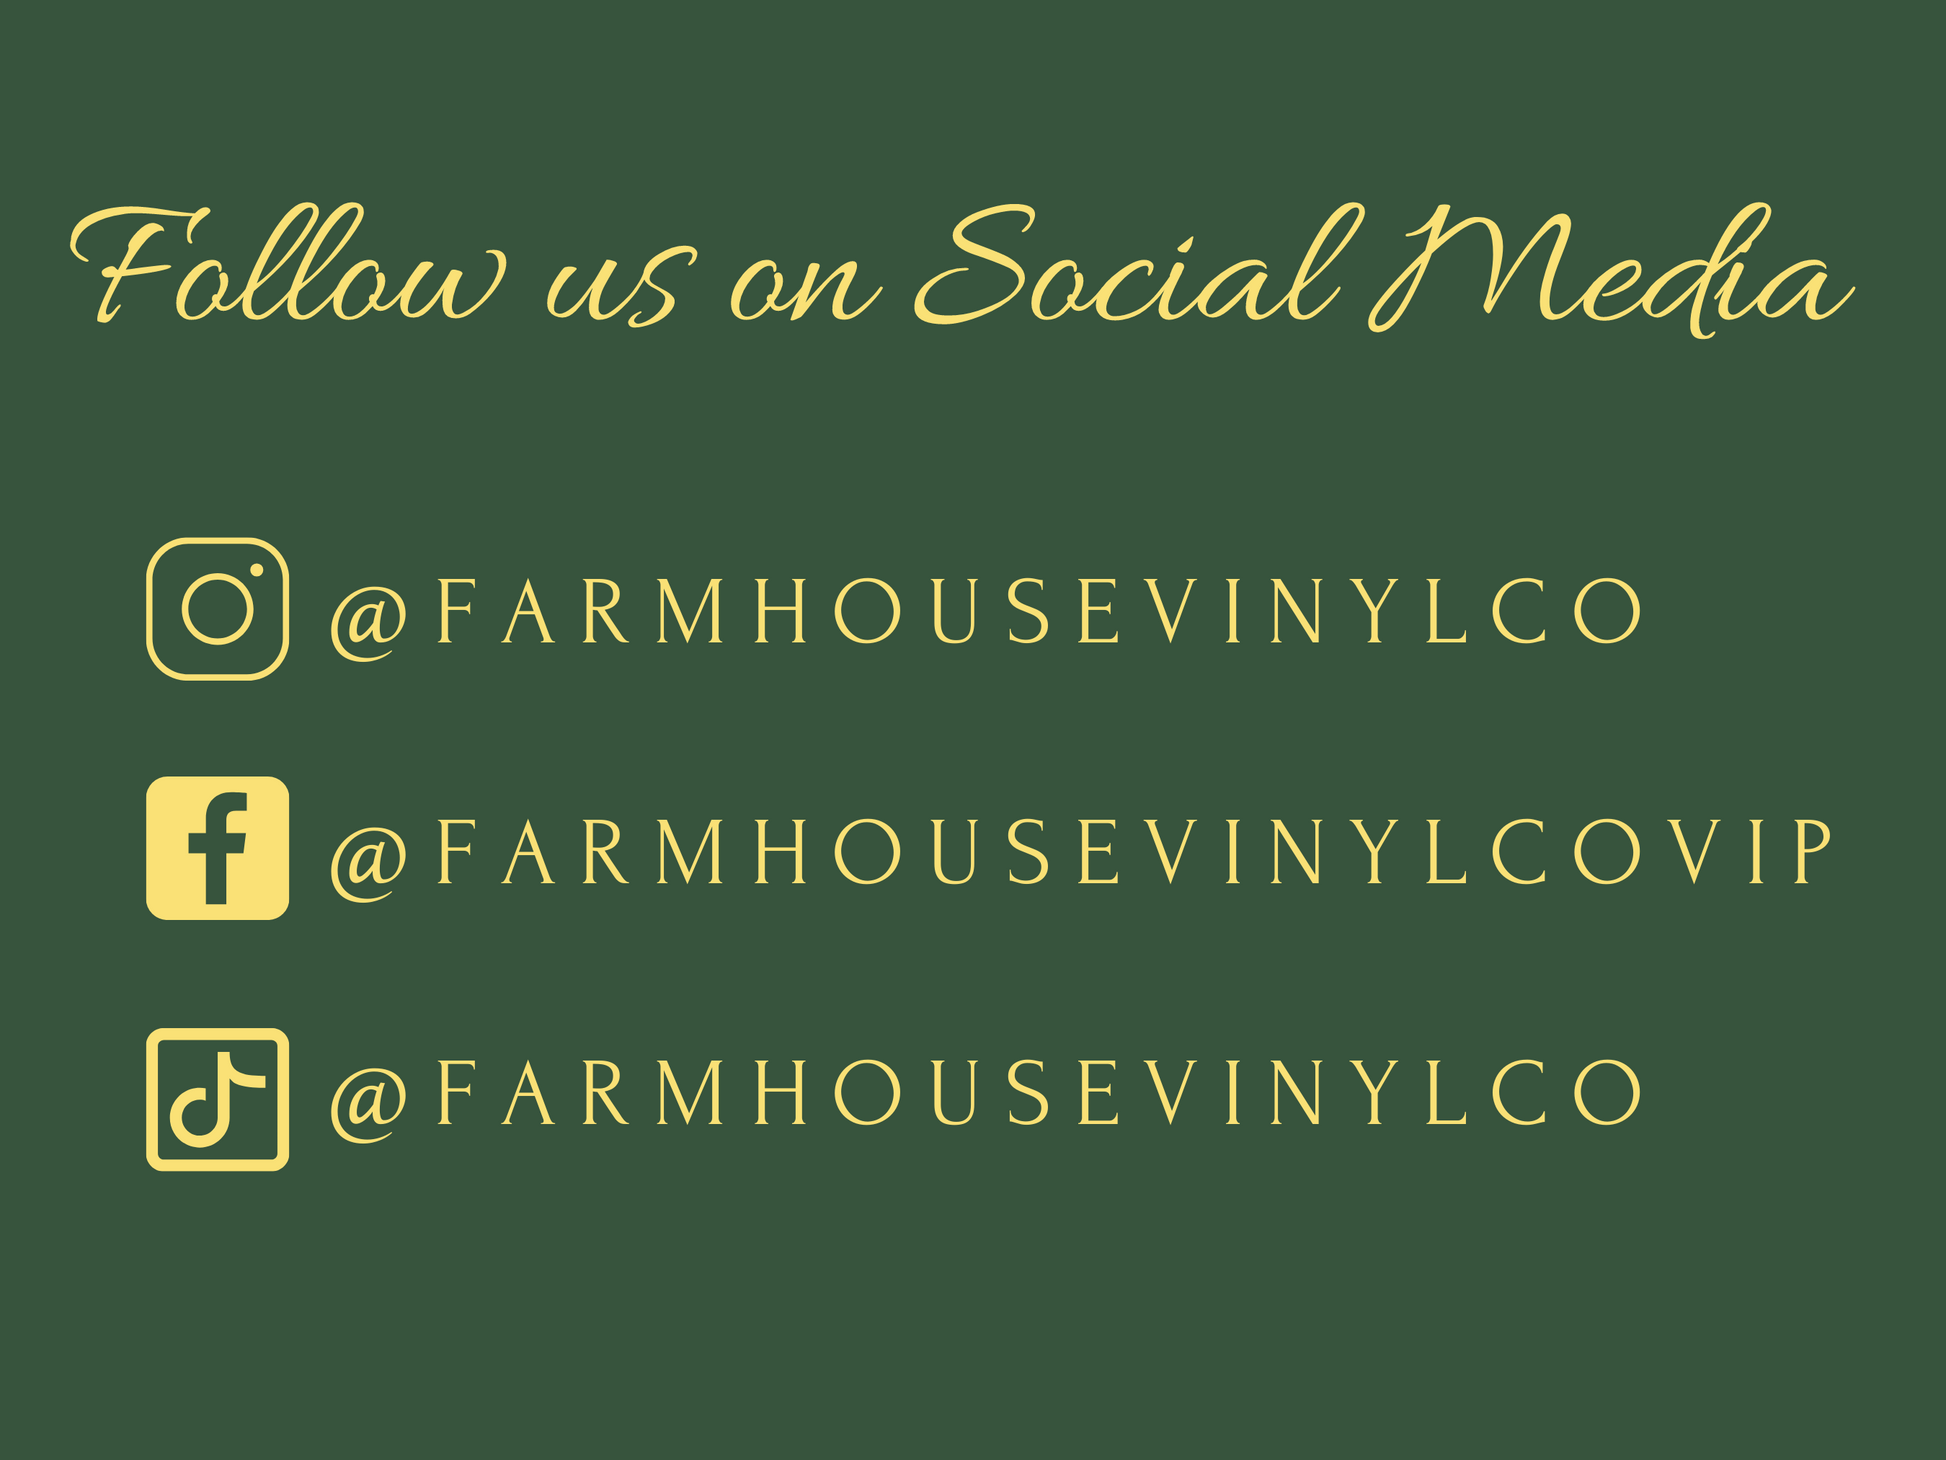 Farmhouse Floral Utensils and Hello Spring Towels - Farmhouse Vinyl Co